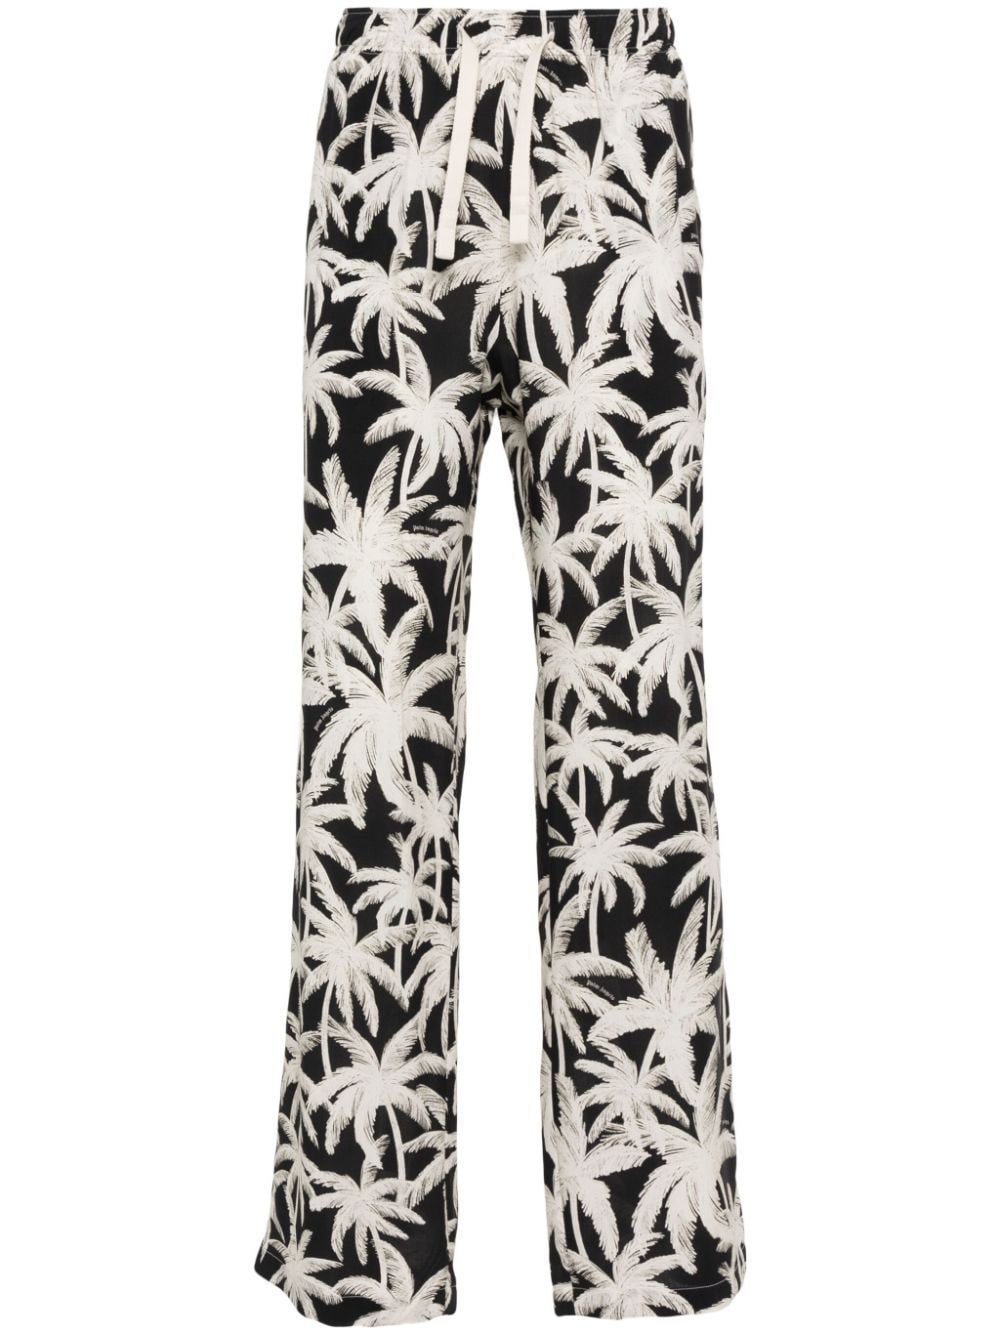 Palm tree print trousers